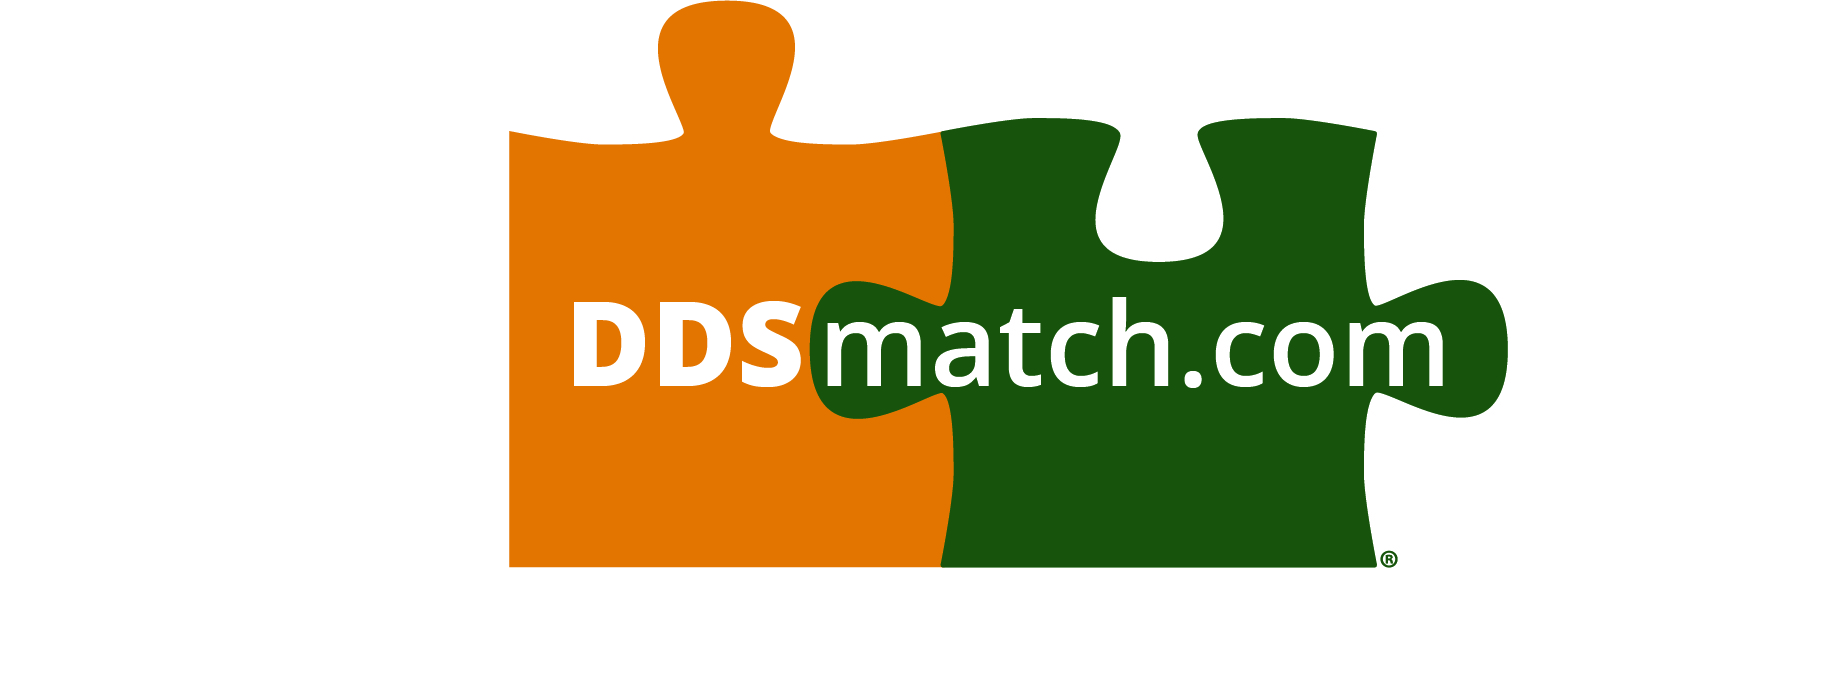 ddsmatch.com - Scott Belcheff Logo